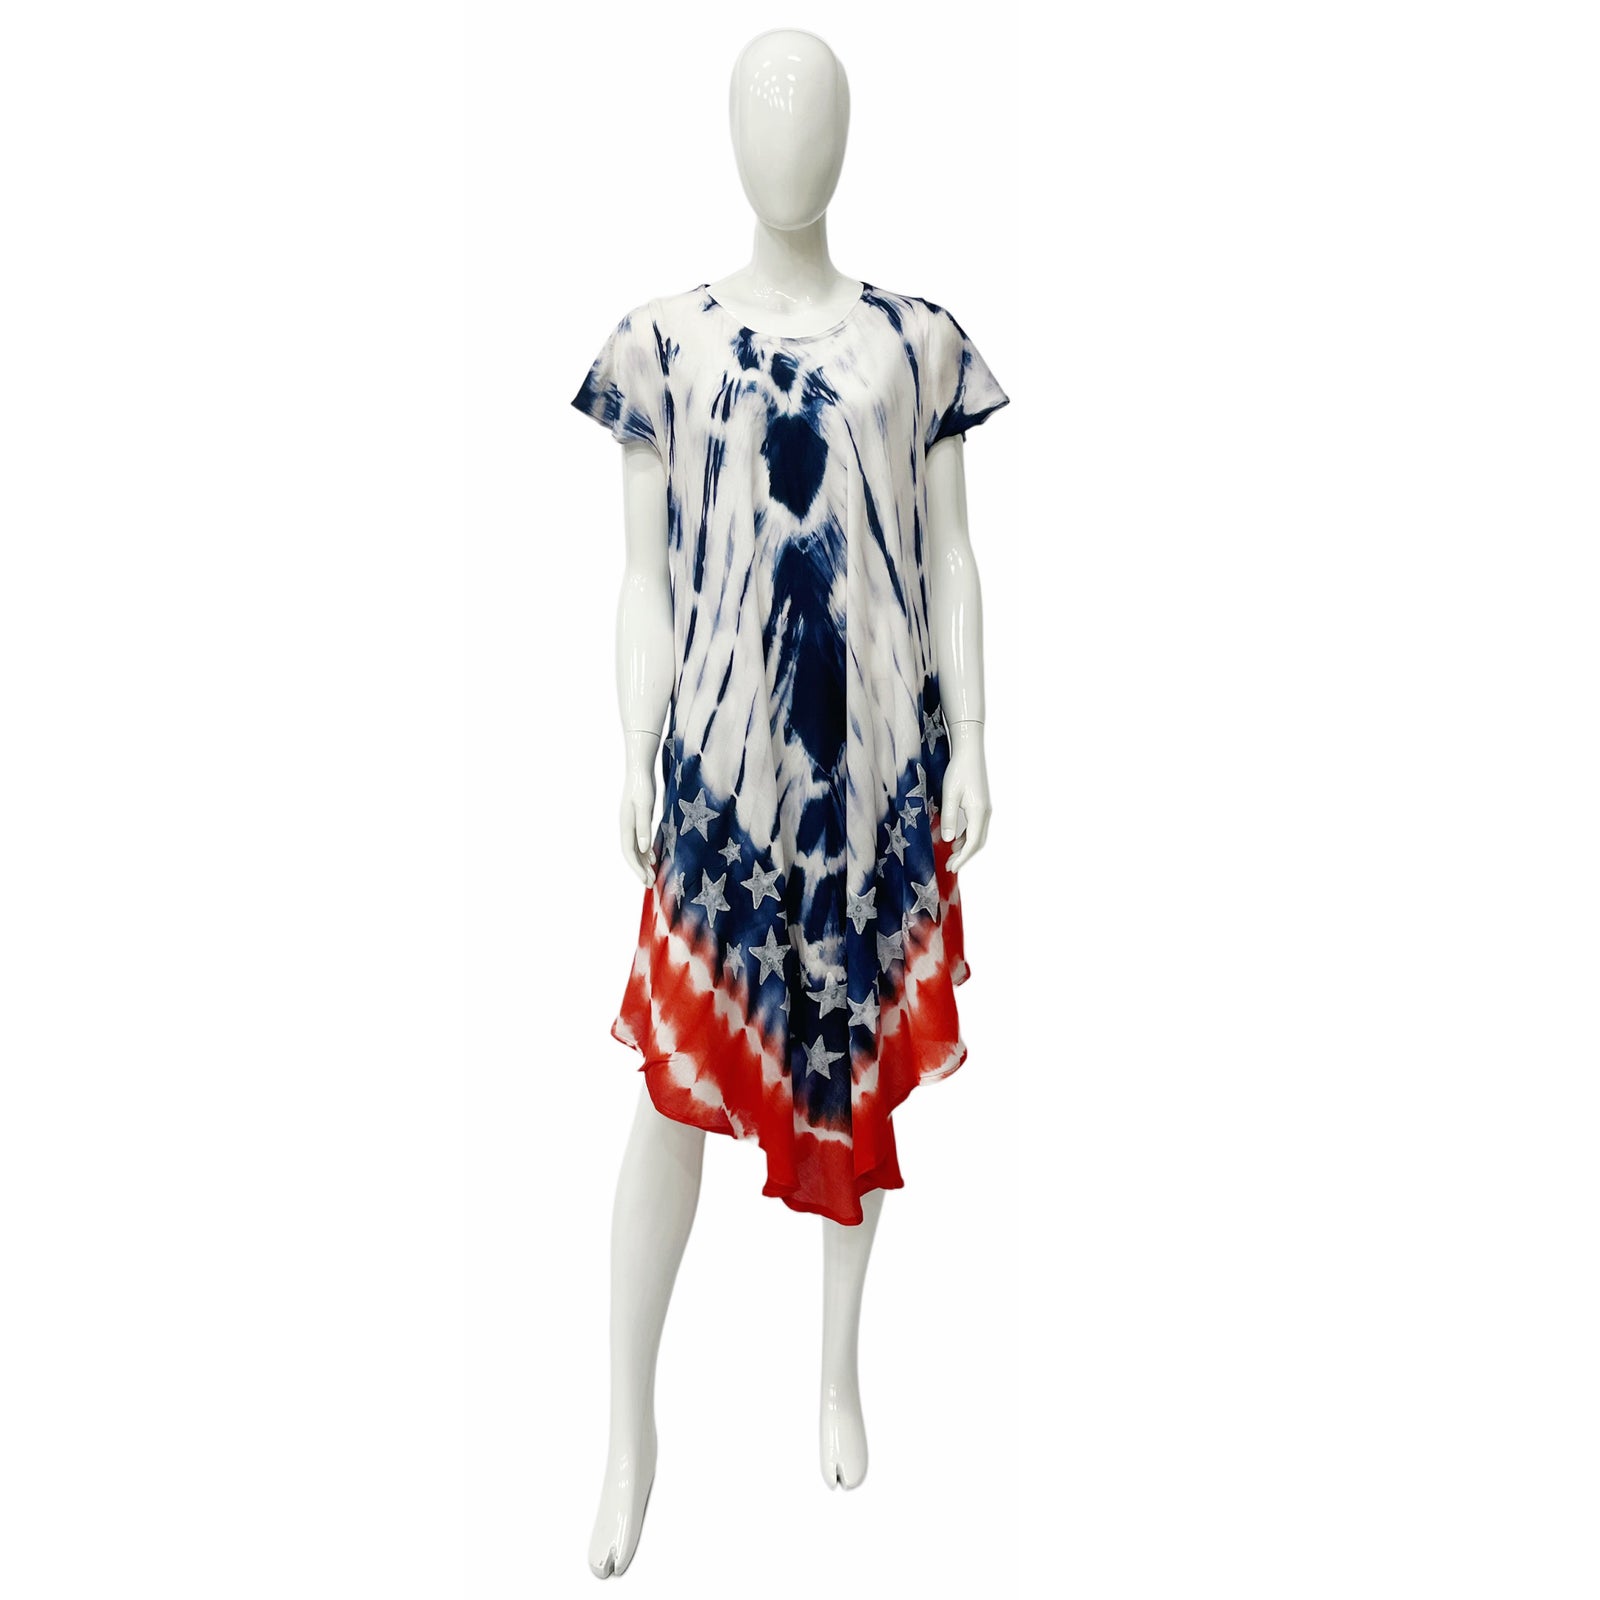 Wholesale Women's Dresses Rayon Staple American Flag Tie Dye with Block Paint Ss Umbrella Dress 120Gms Oc 6-48-Case O-S Simone NWa2